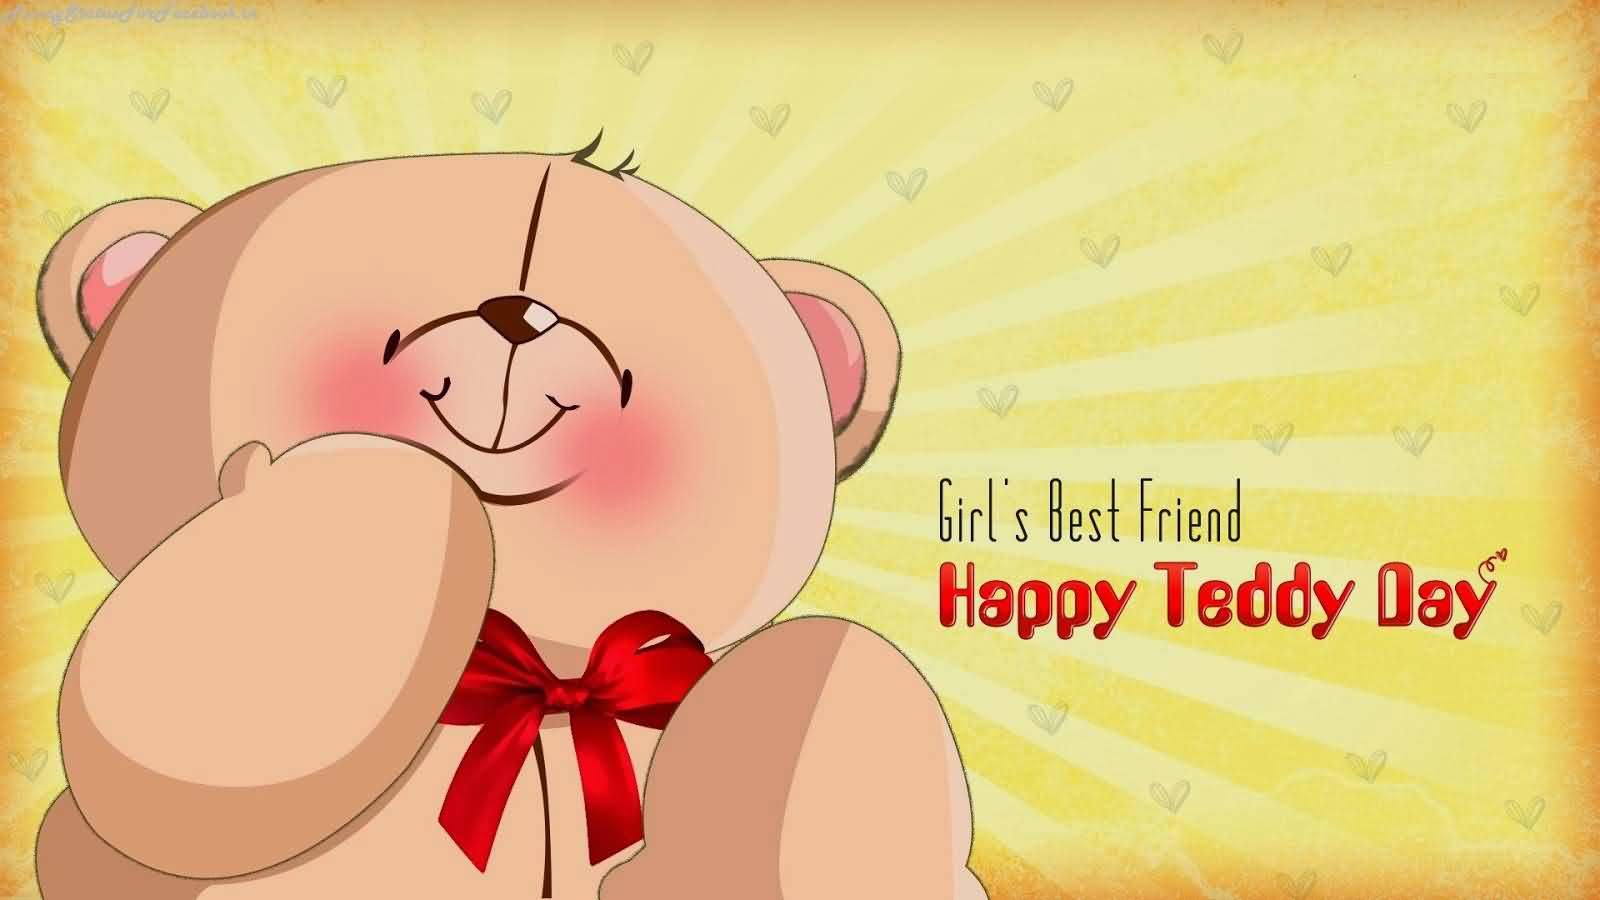 girl’s best friend happy teddy day